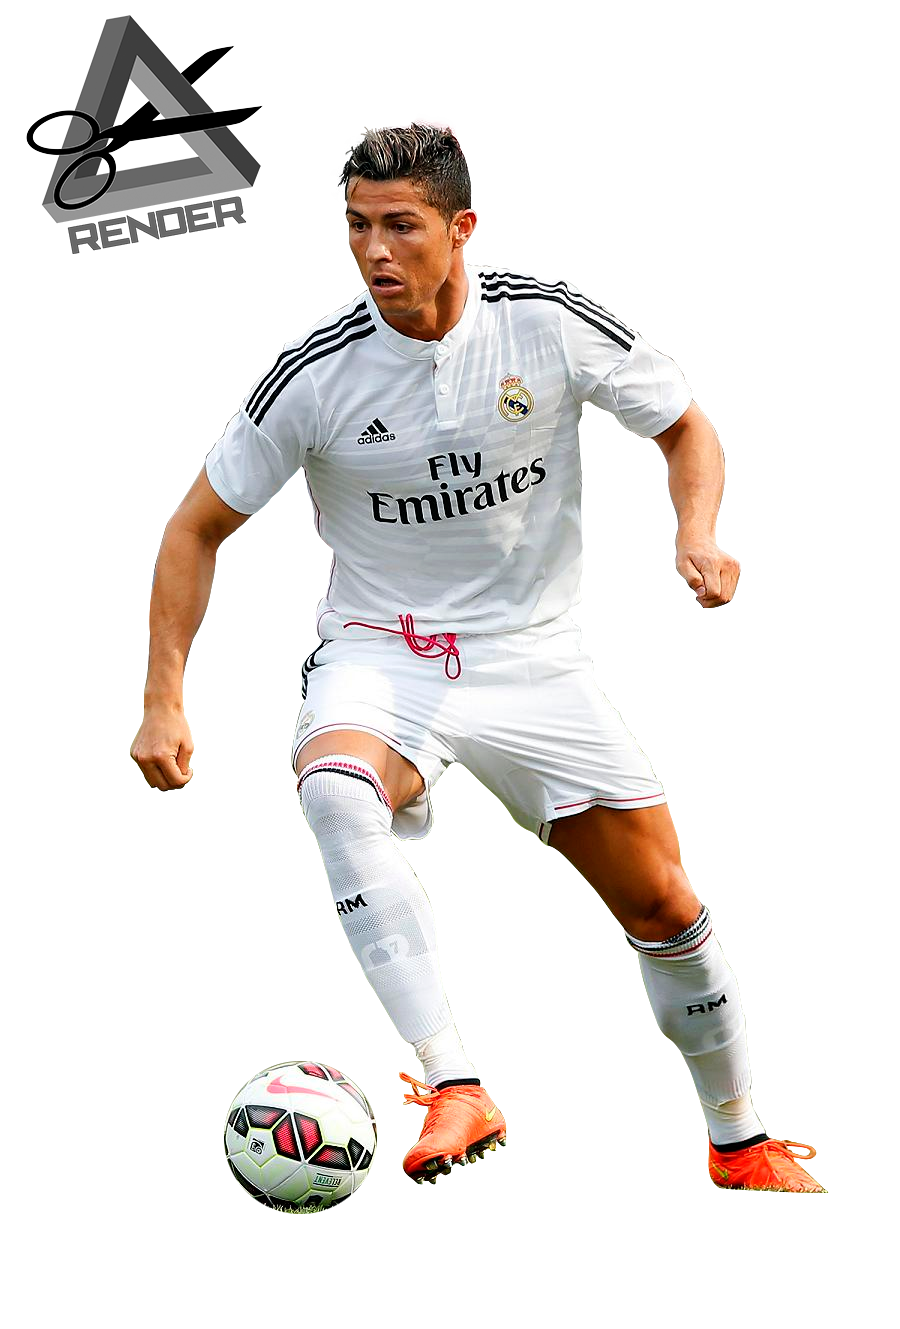 Cristiano Ronaldo Real Madrid Render By Raat96